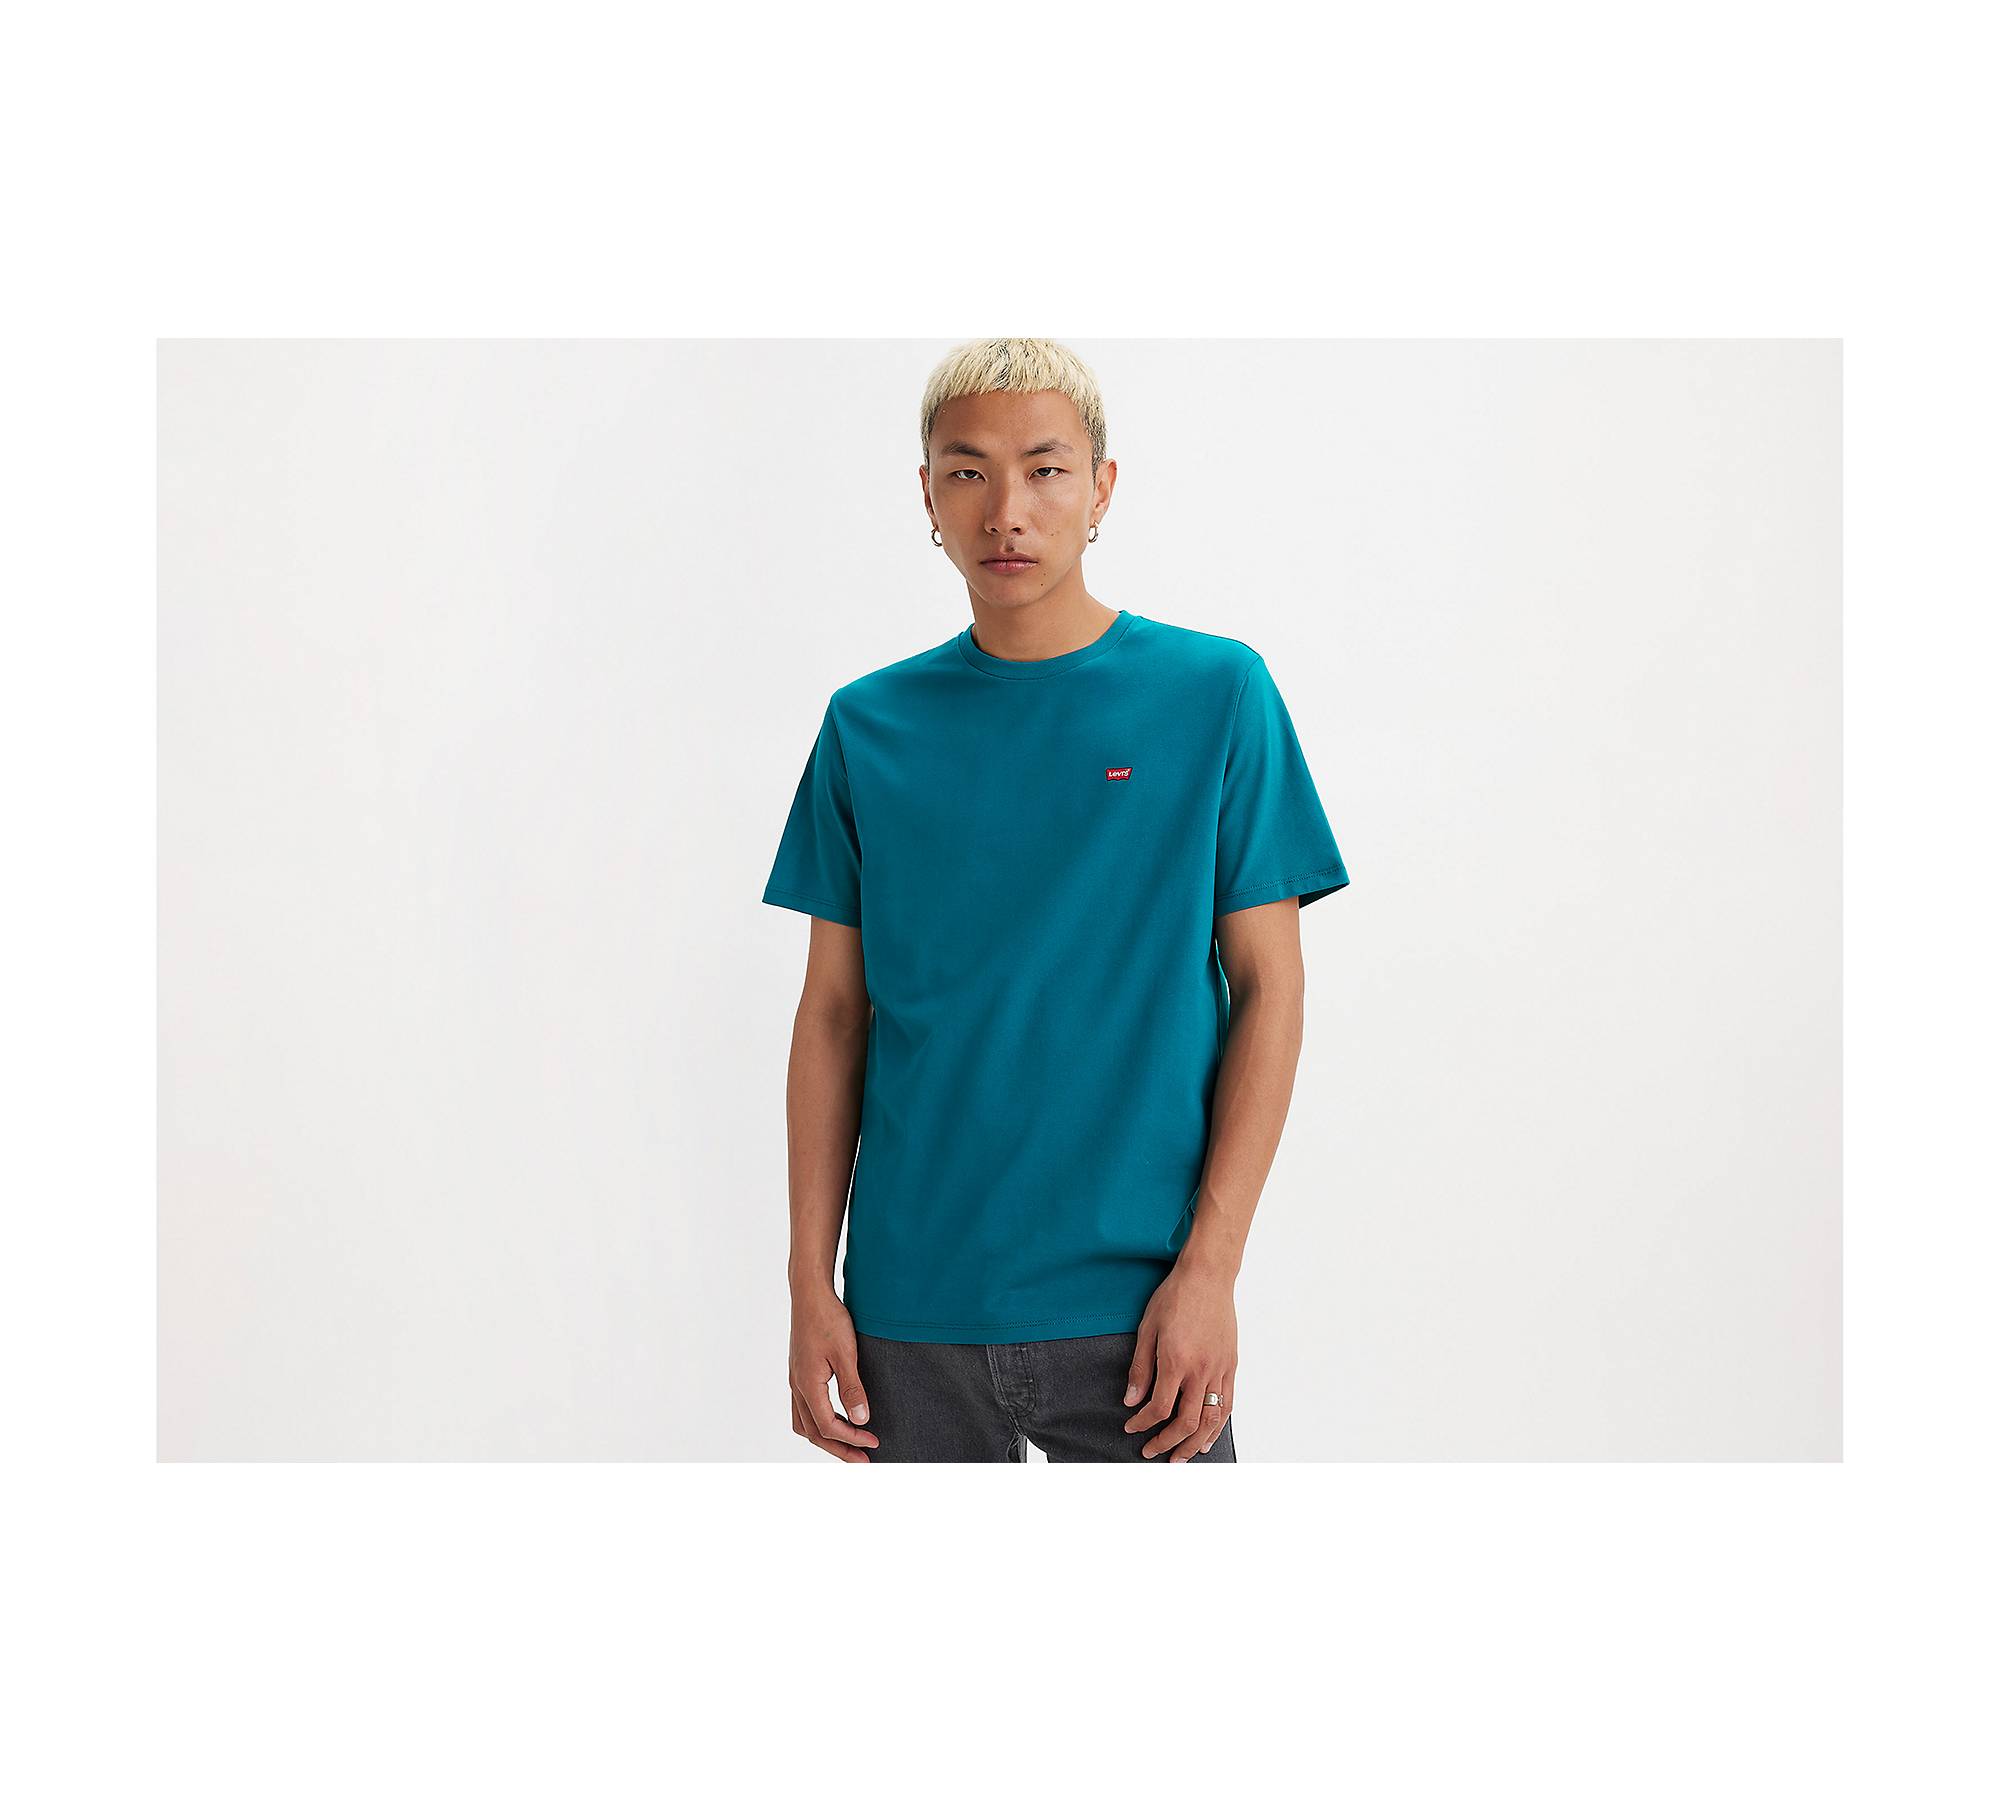 T-shirt Bleu Levi's - Homme